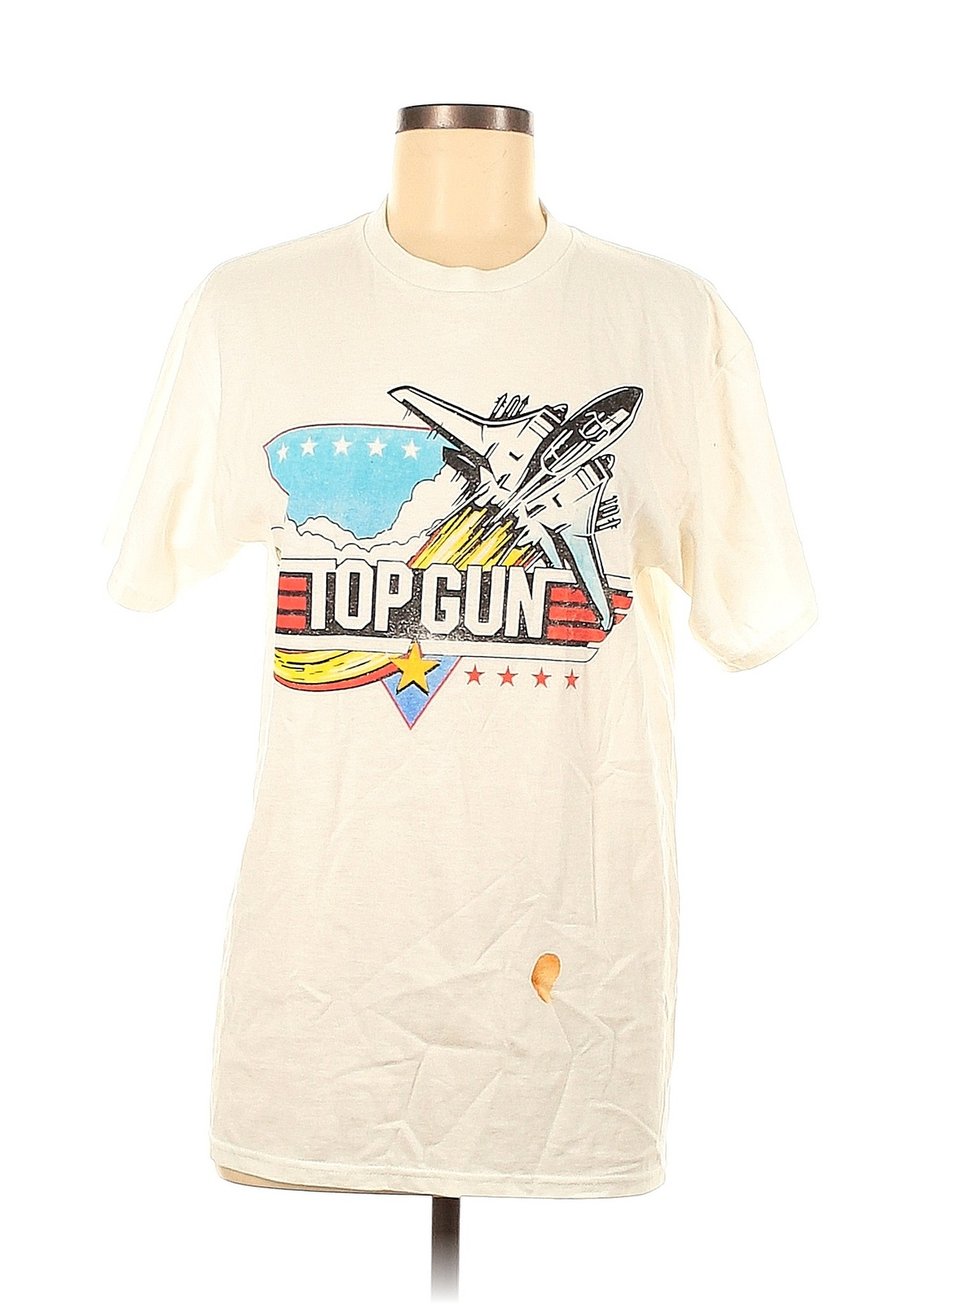 Top Gun, $23.99